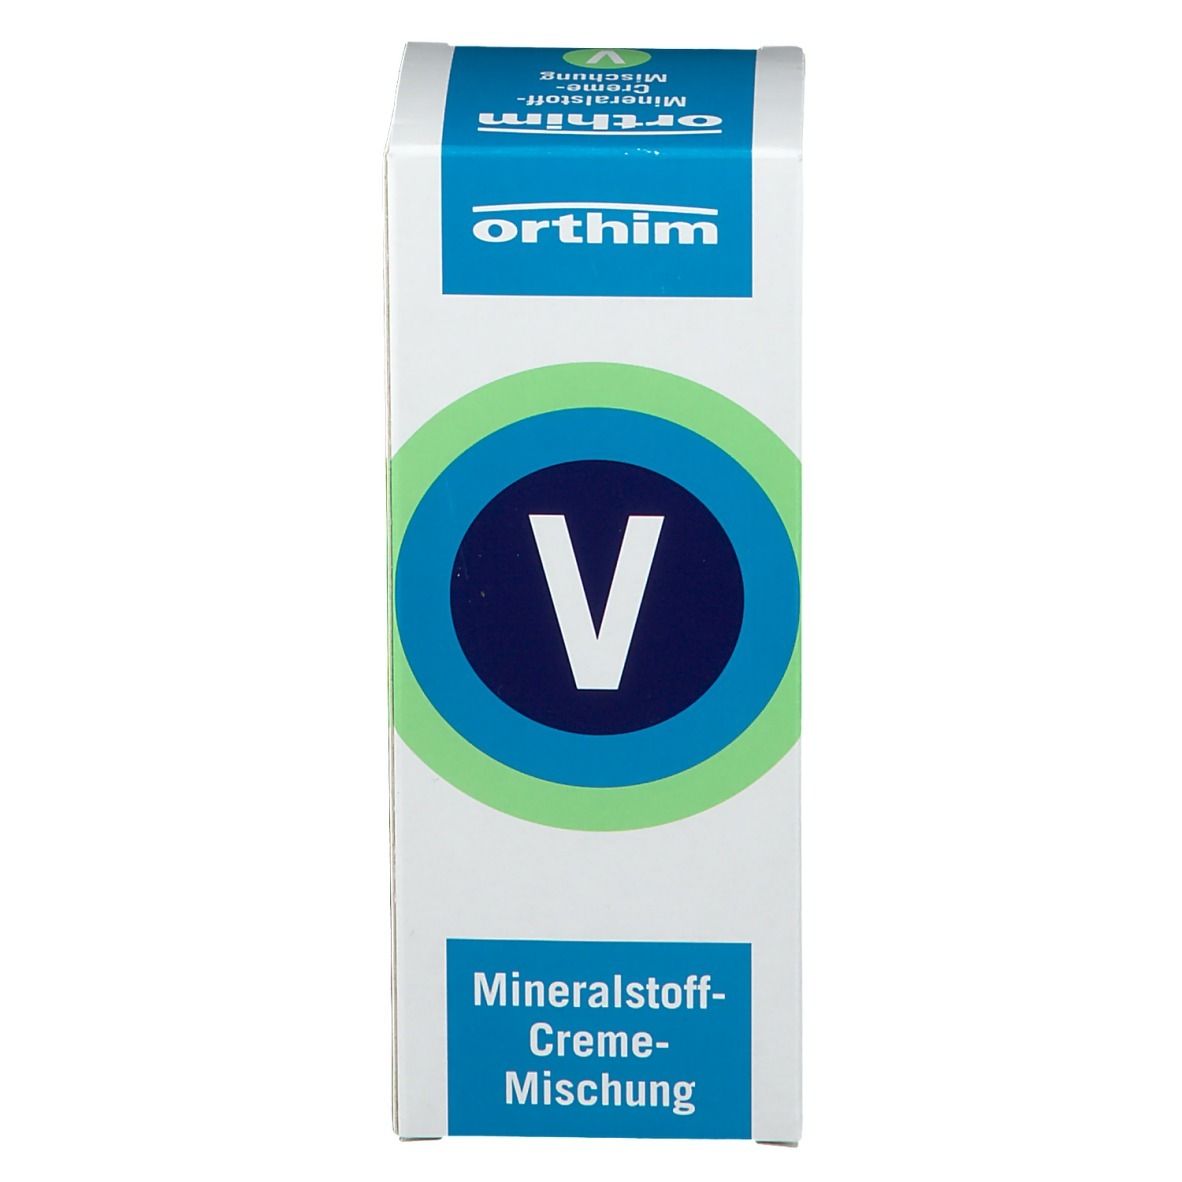 Mineralstoff-Creme-Mischung V